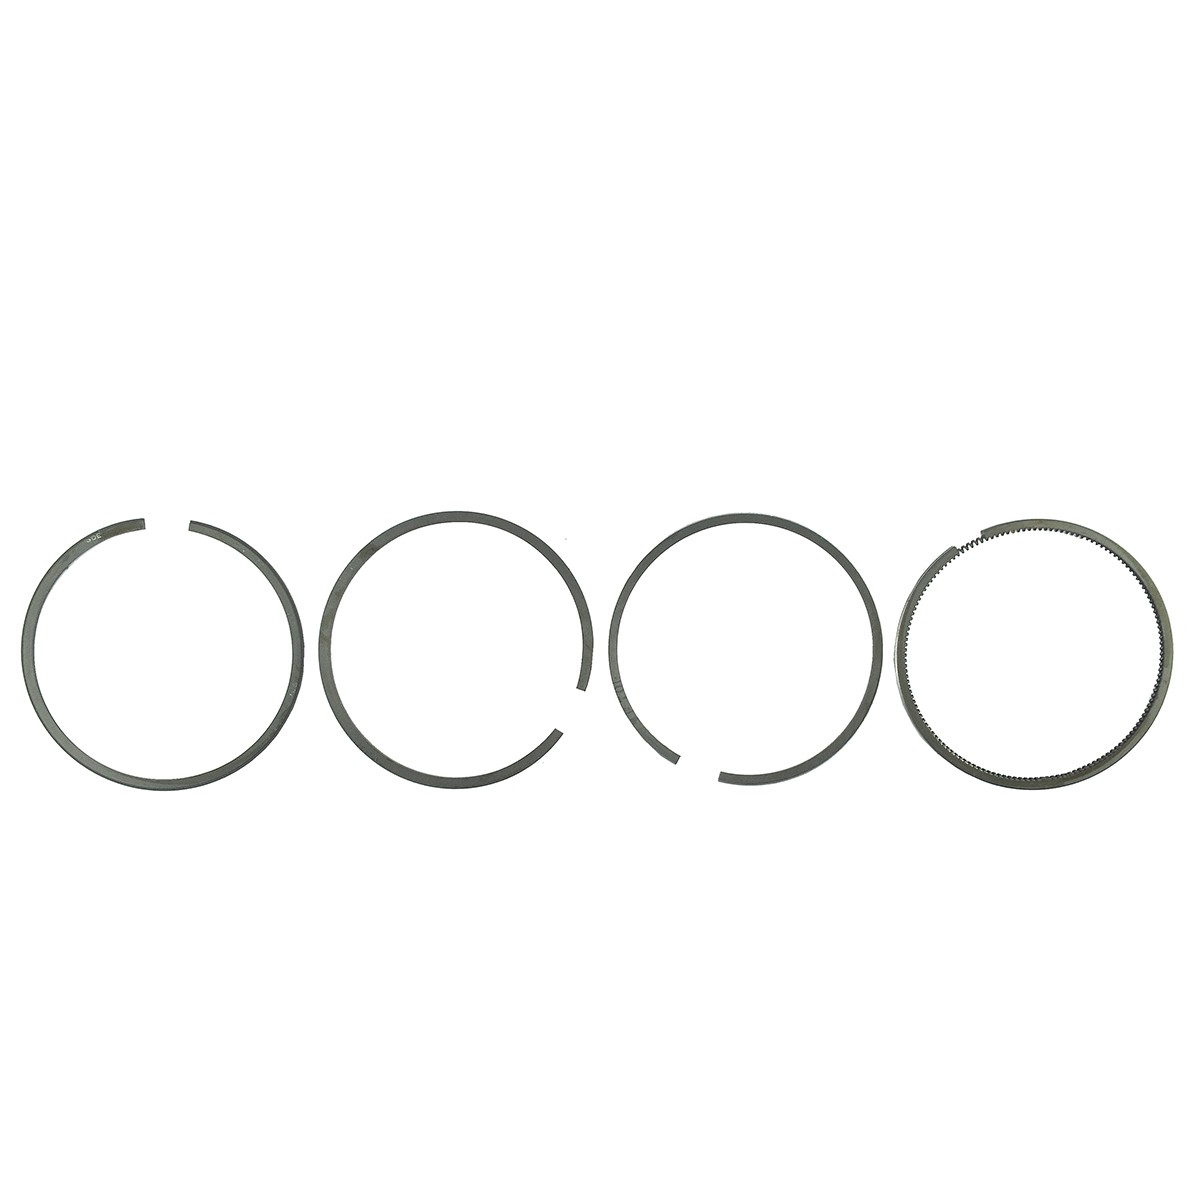 Pístní kroužky / Ø 70 mm / 2,50 x 2,50 x 2,50 x 4,00 mm / Mitsubishi C60/K2C/K3C/K4C / MM432983